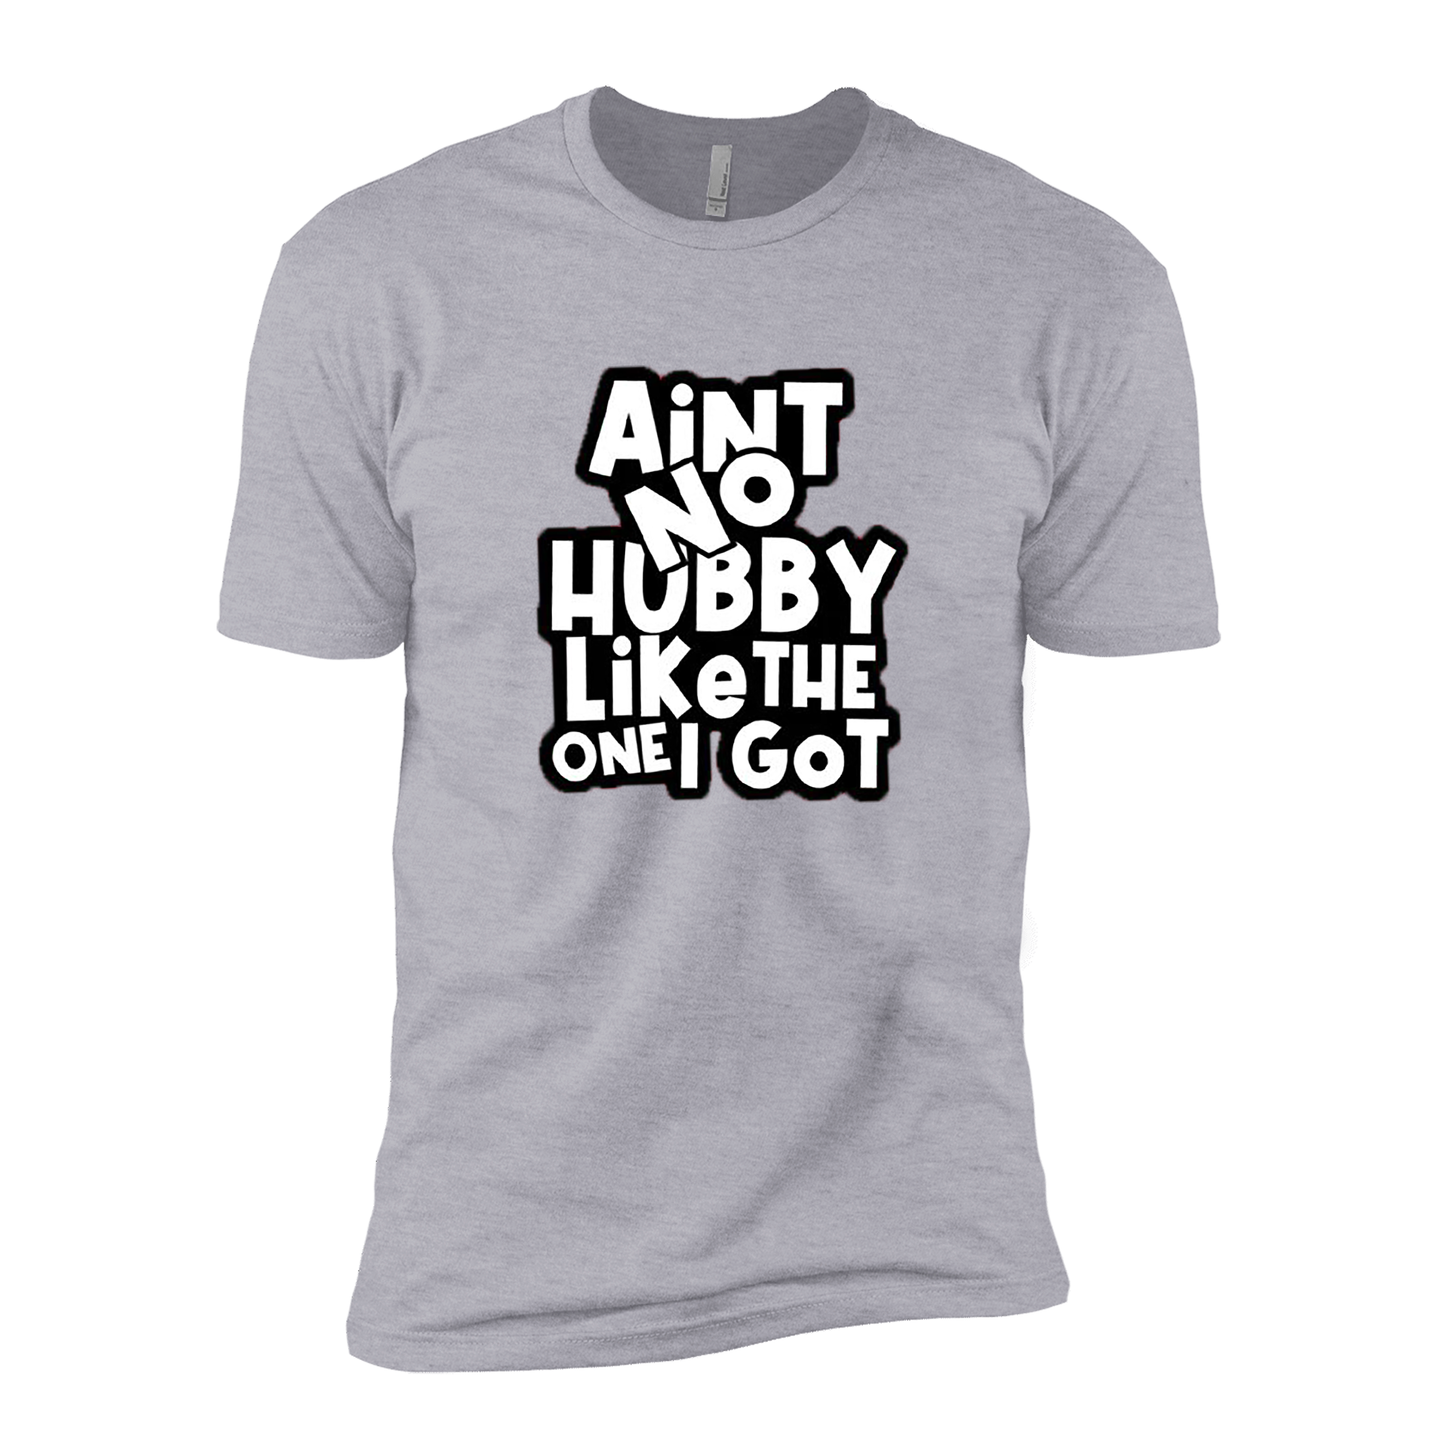 Aint No Wifey/Hubby Like The One I Got | Gray Anniversary Shirts